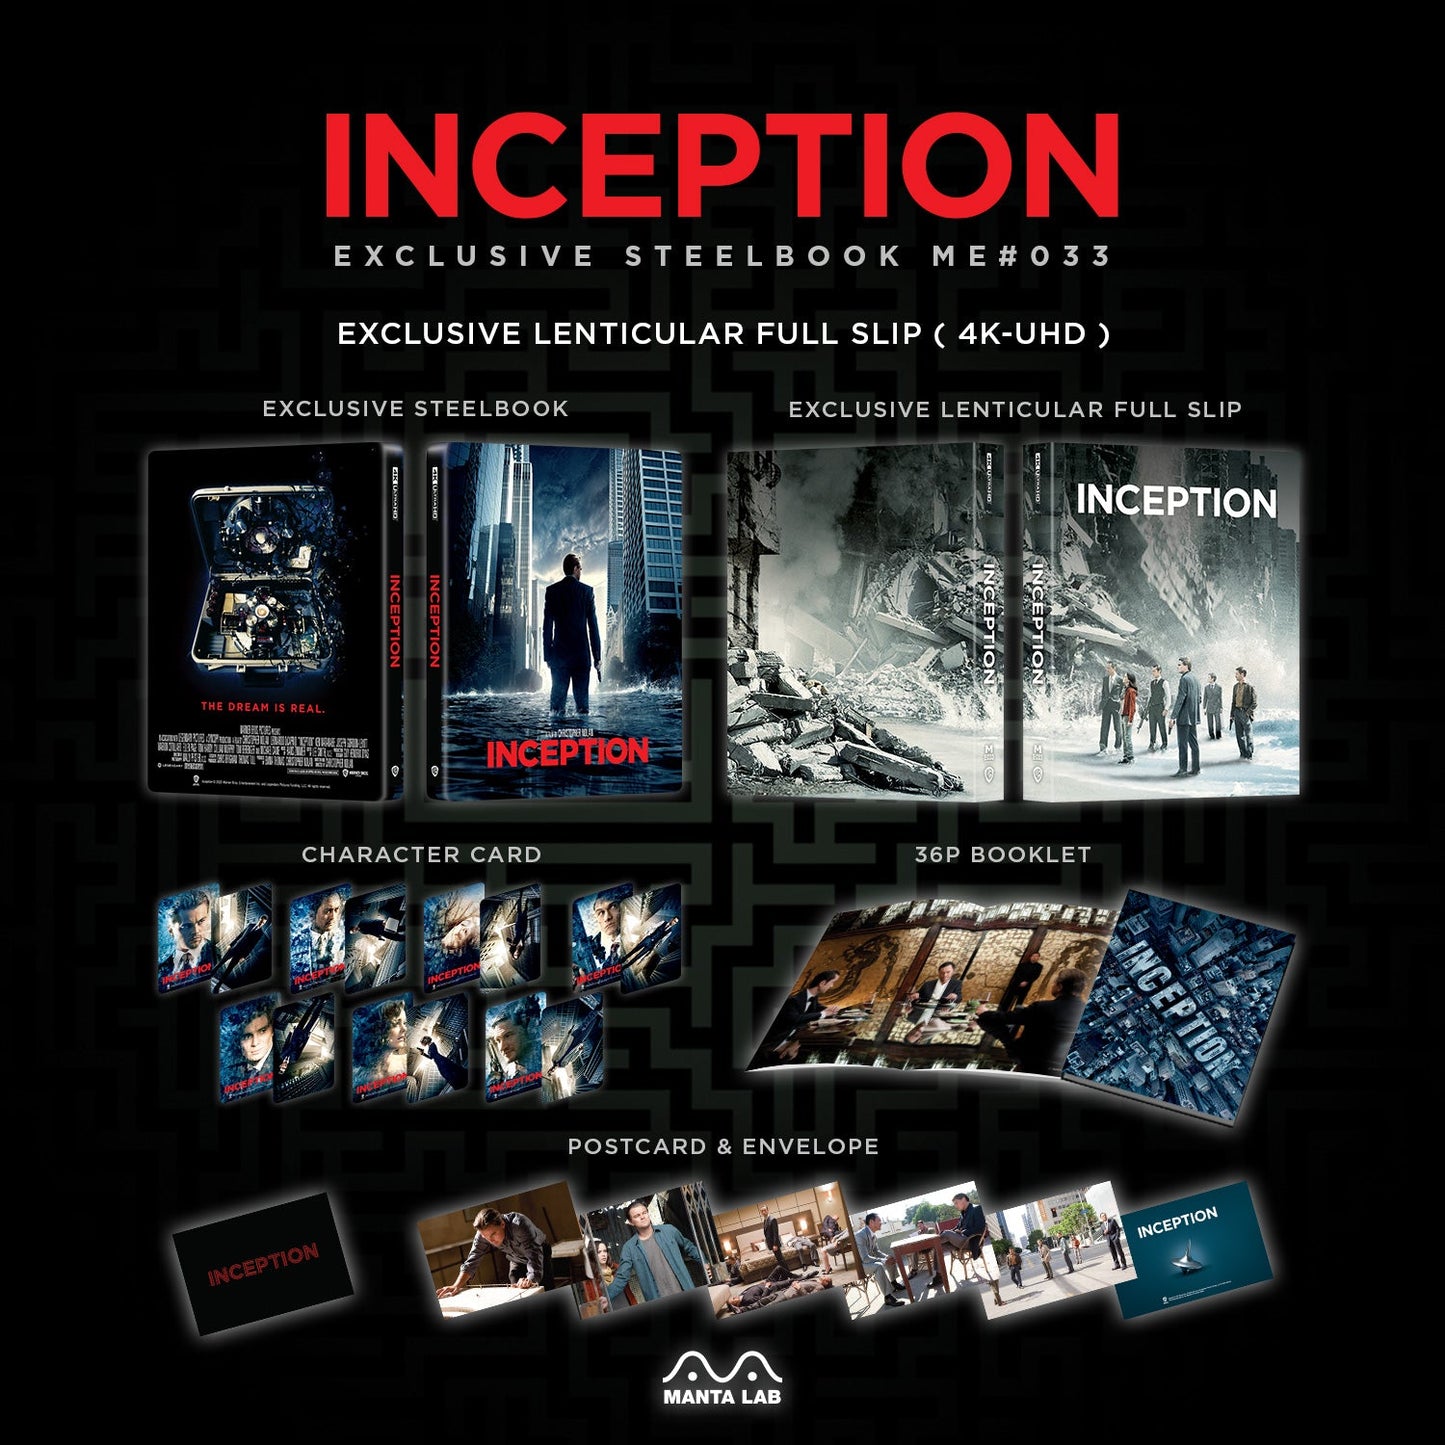 Inception 4K Blu-ray Steelbook Manta Lab Exclusive ME#33 One Click Box Set